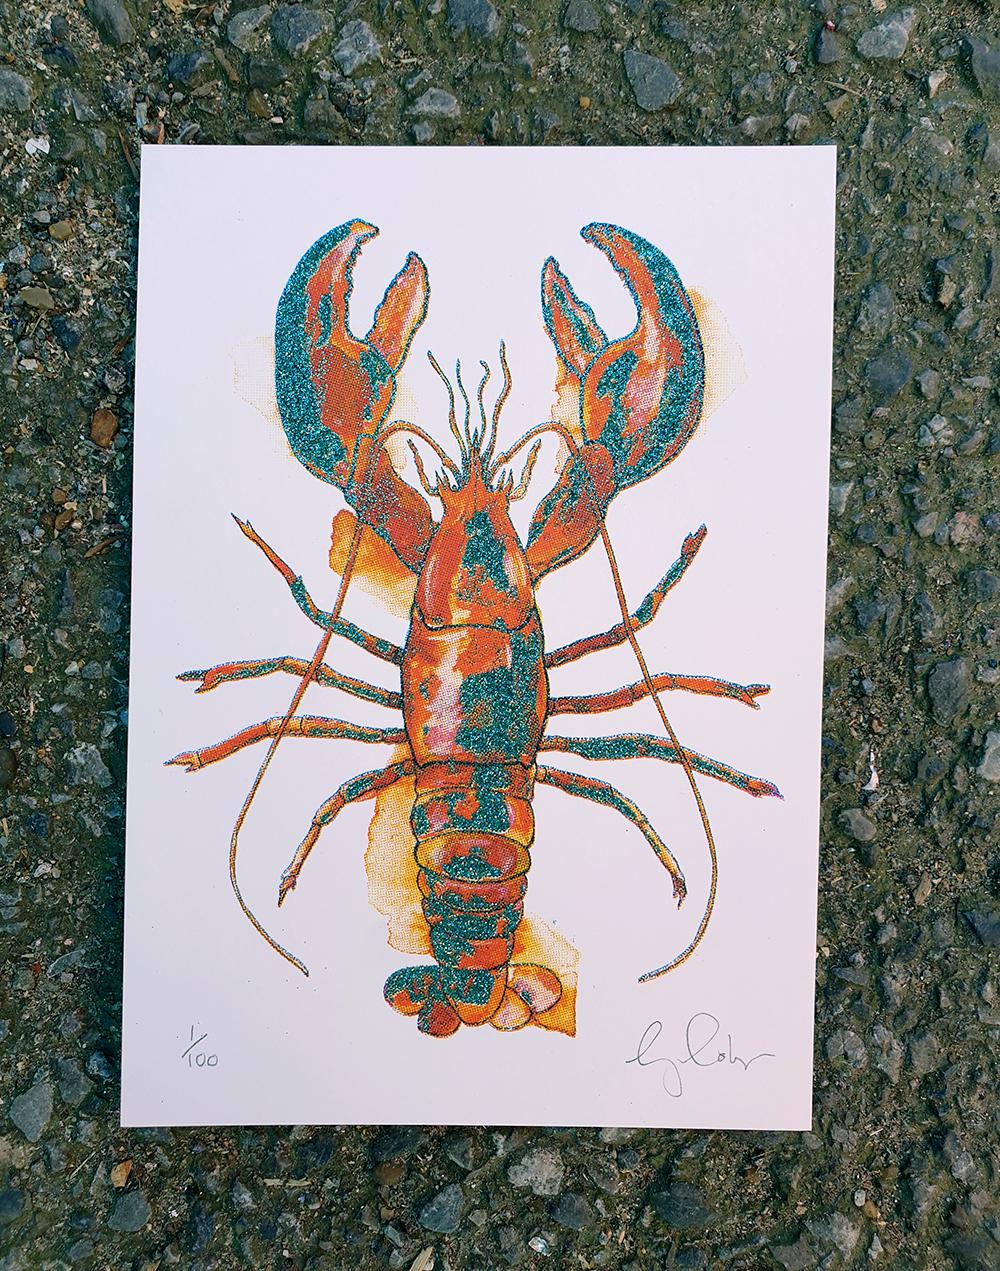 Mini Lobster - Print by Gavin Dobson